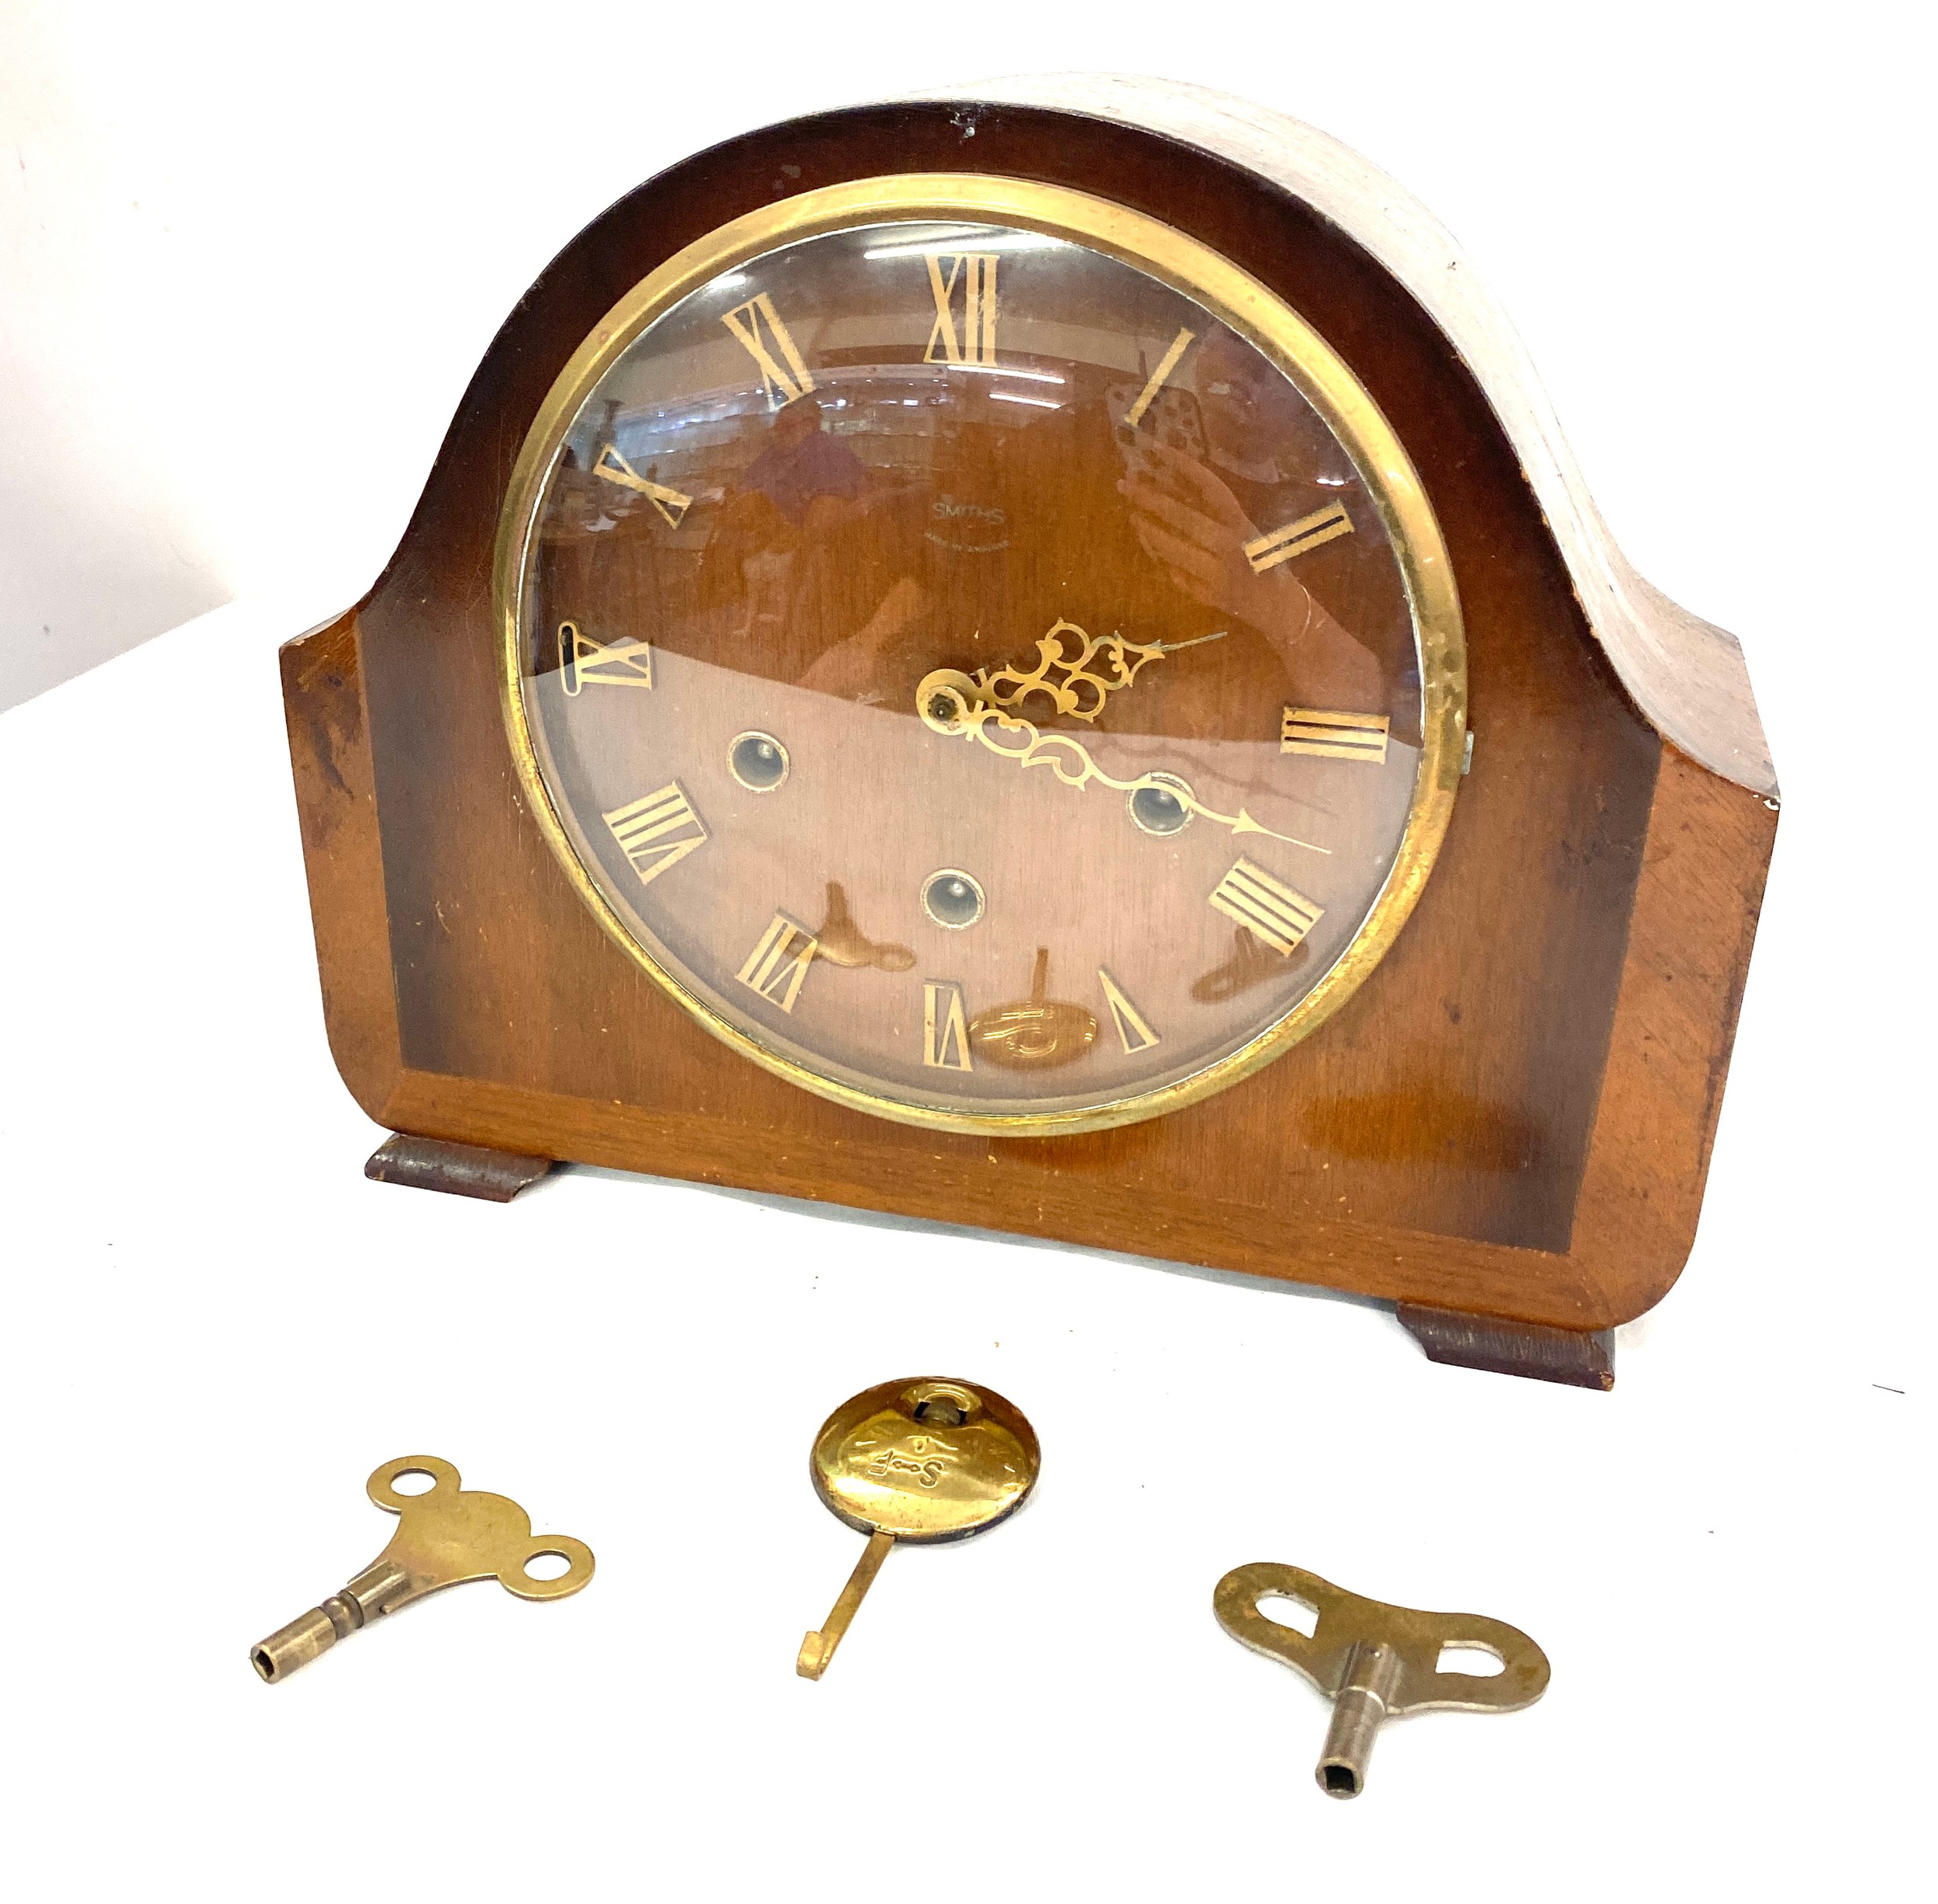 Smiths 3 Key hole mantle clock, with key and pendulum , untested